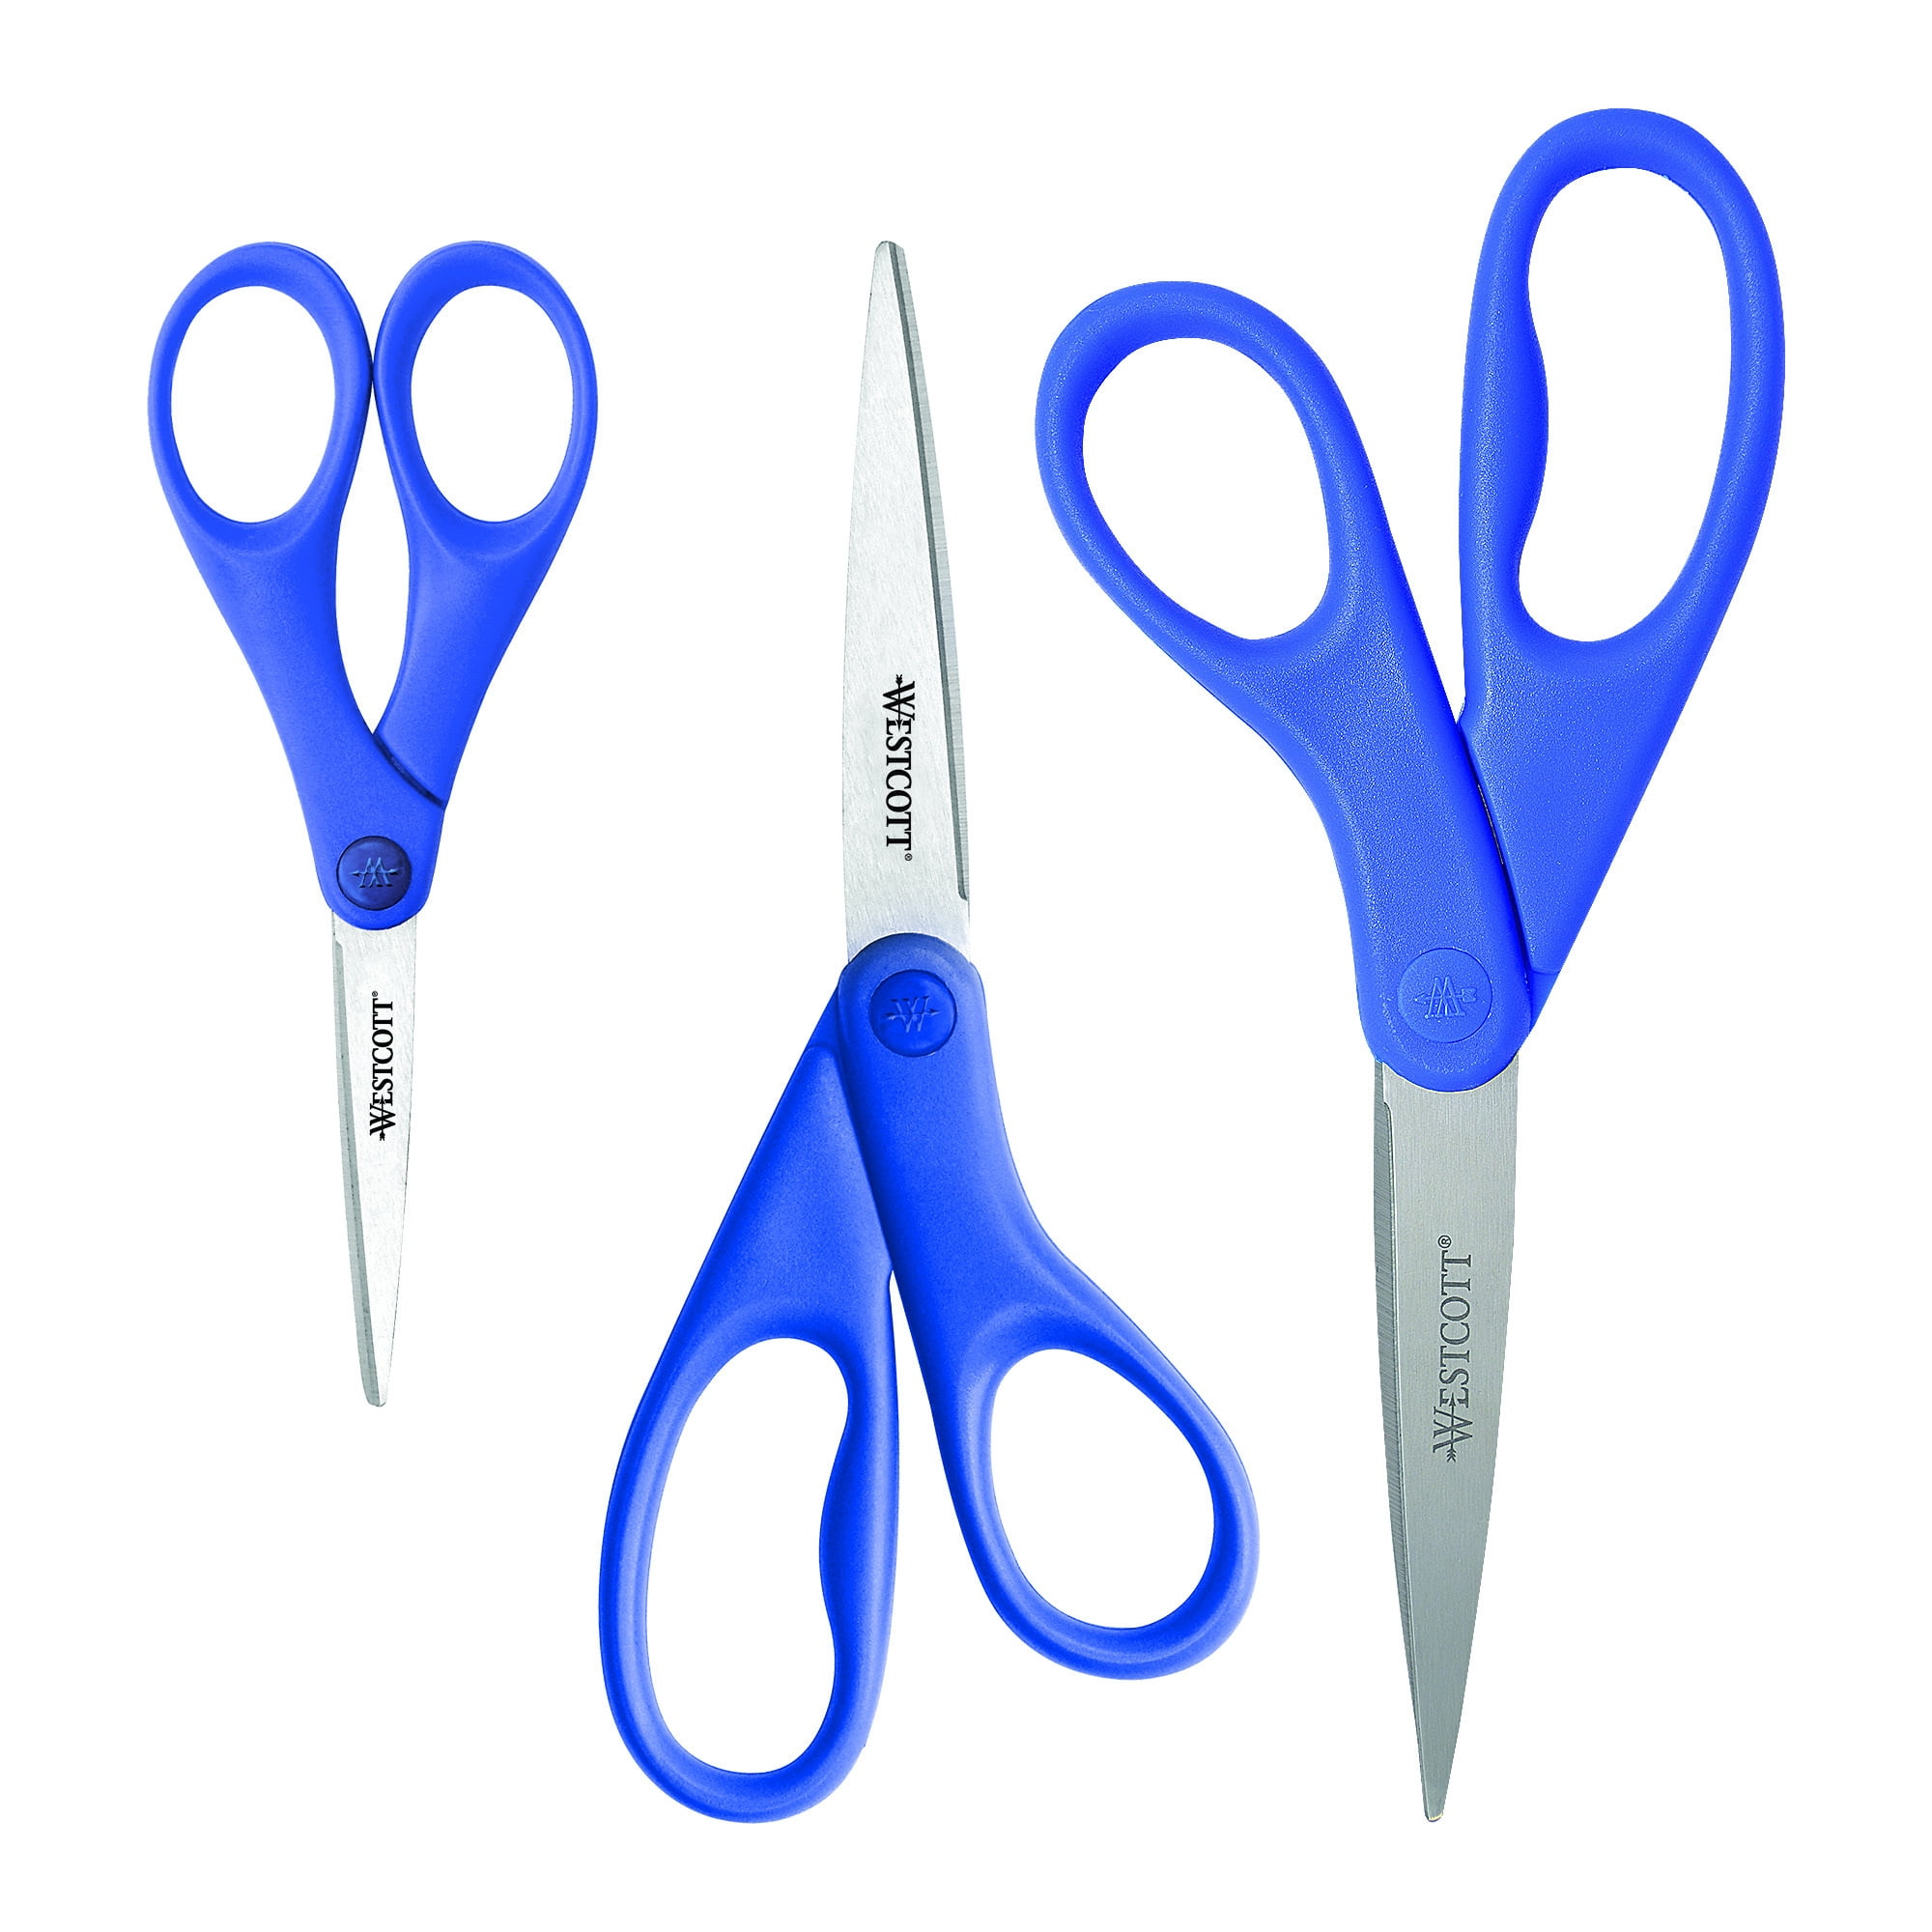 Westcott All Purpose Scissors, 5", 7", 8", for Office, Blue, 3-Pack